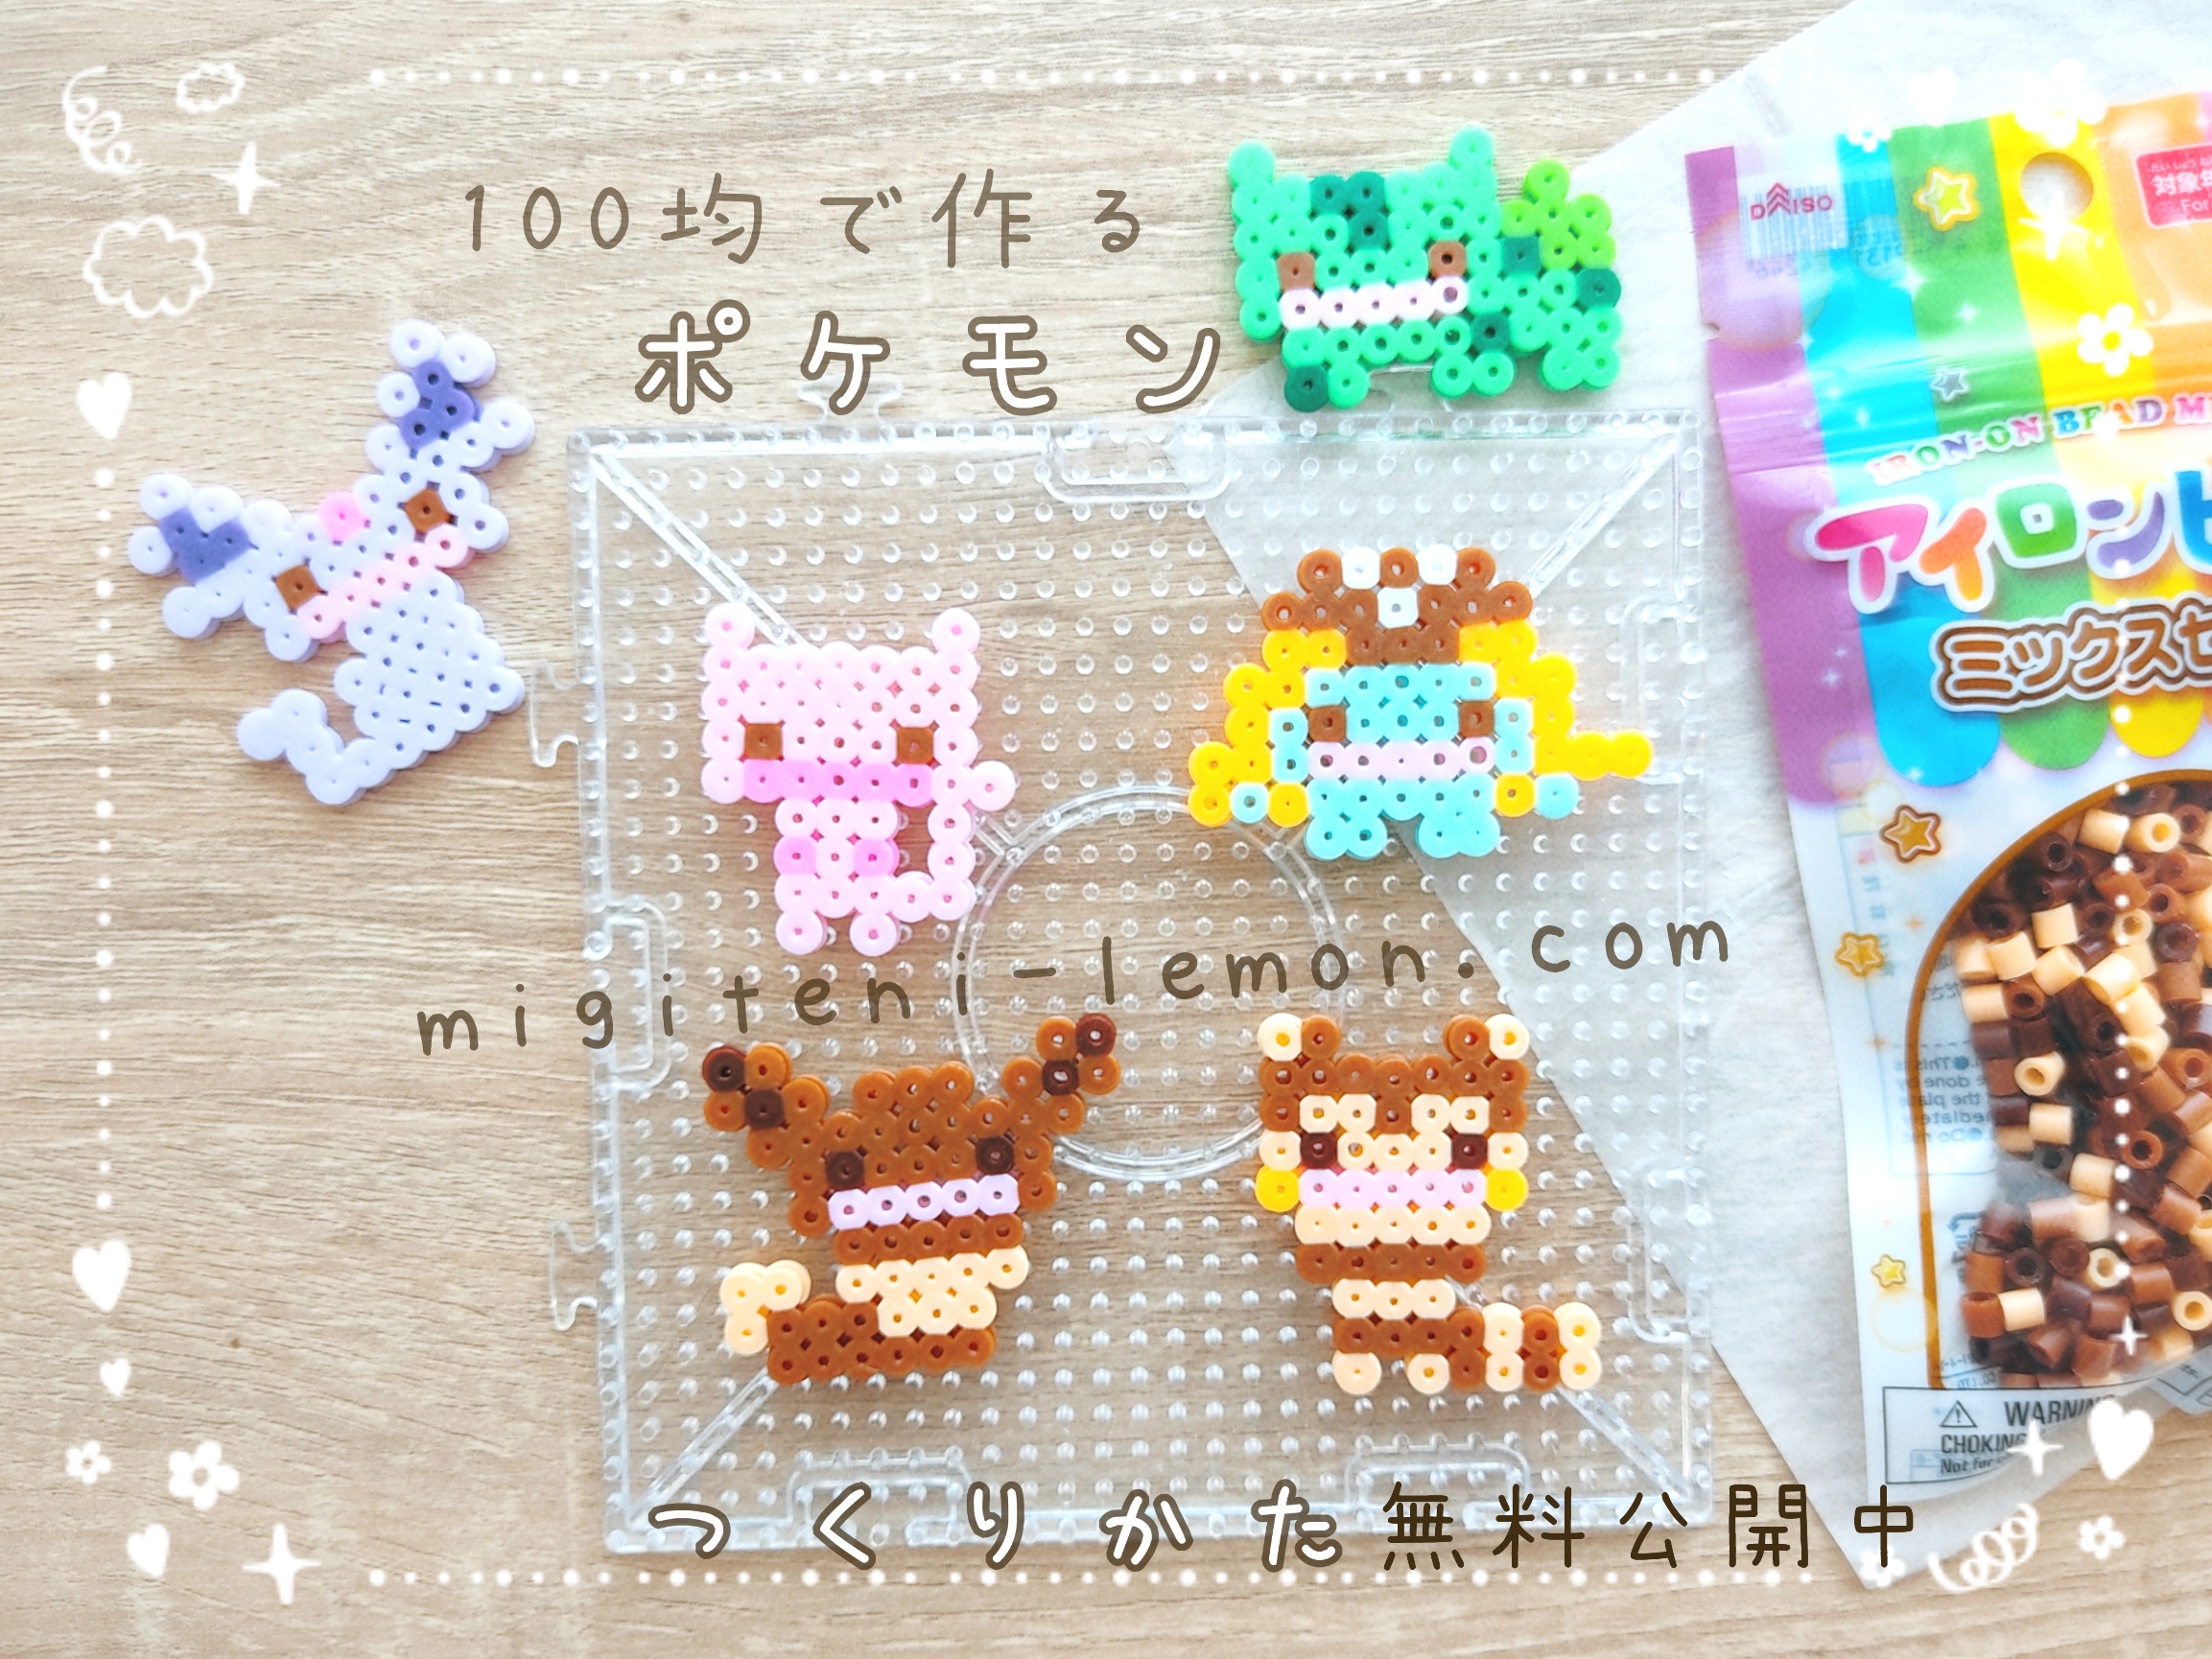 metamon-ditto-mew-kusaihana-gloom-eievui-eevee-ootachi-furret-pokemon-handmade-iron-beads-100kin-daiso-small-square-kids